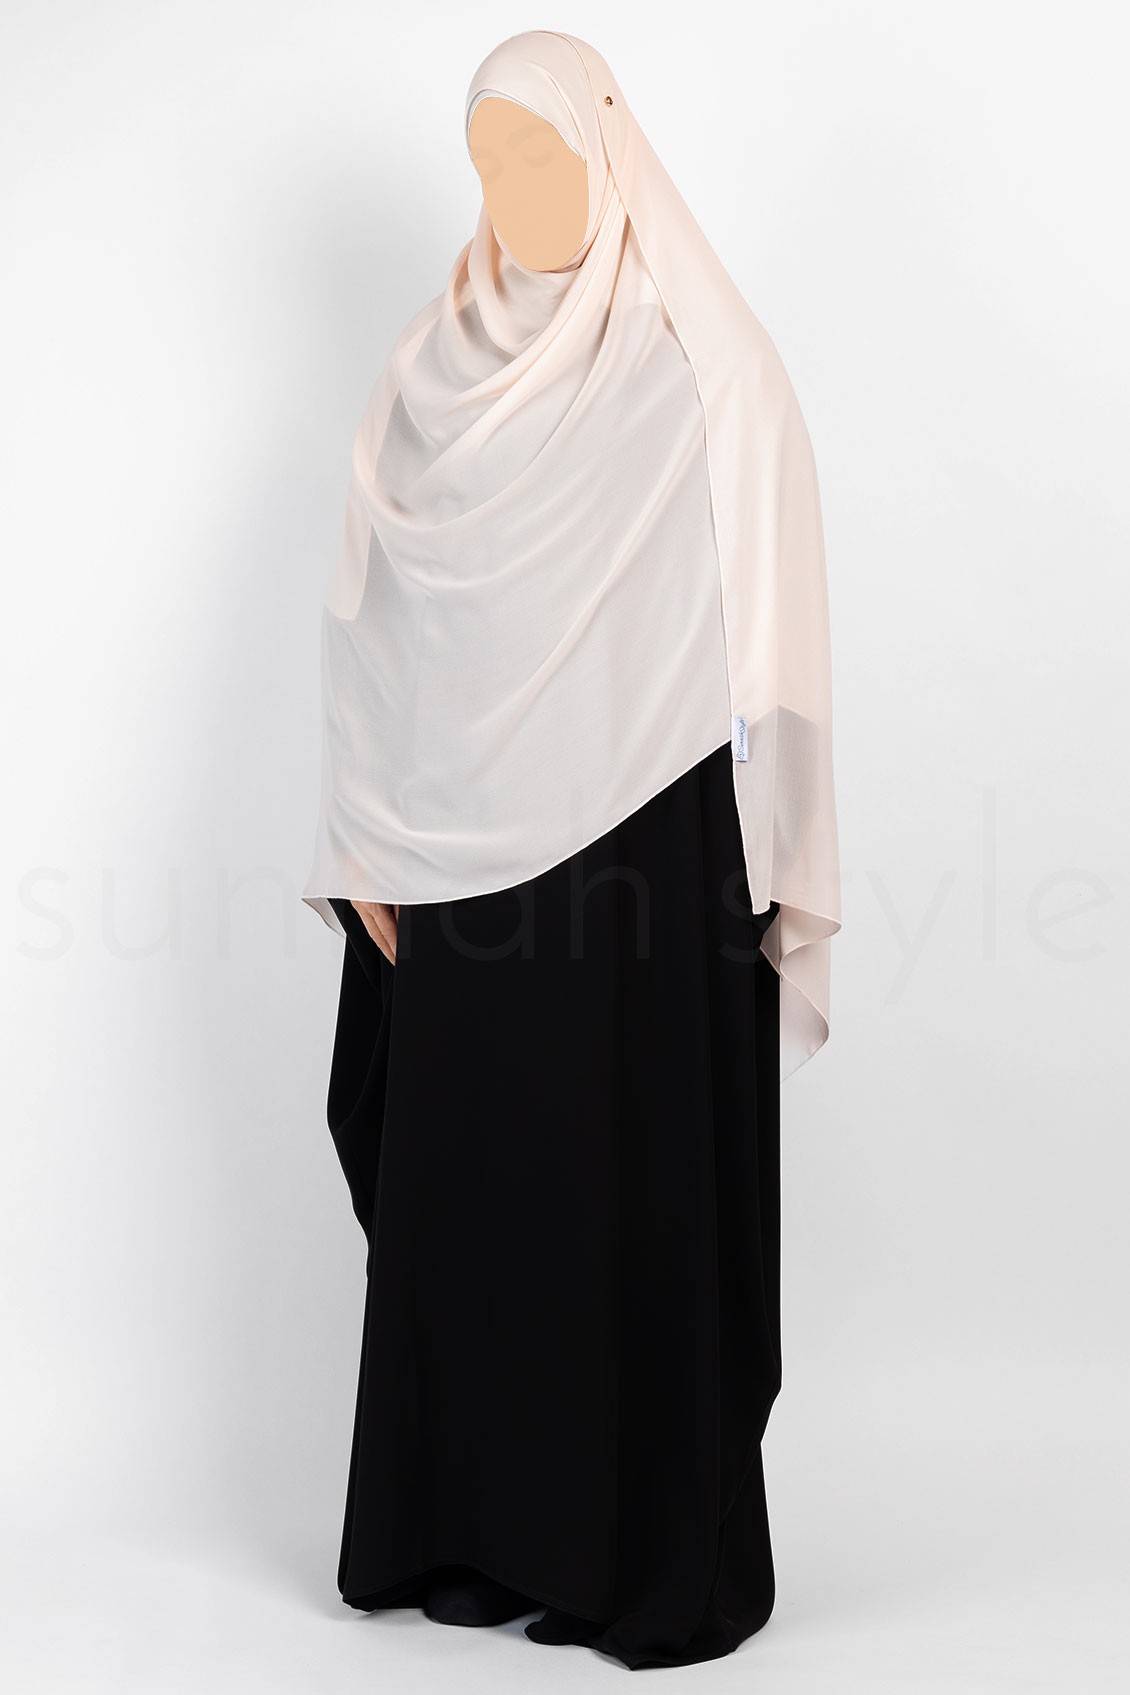 Sunnah Style Essentials Shayla - Large Caramel